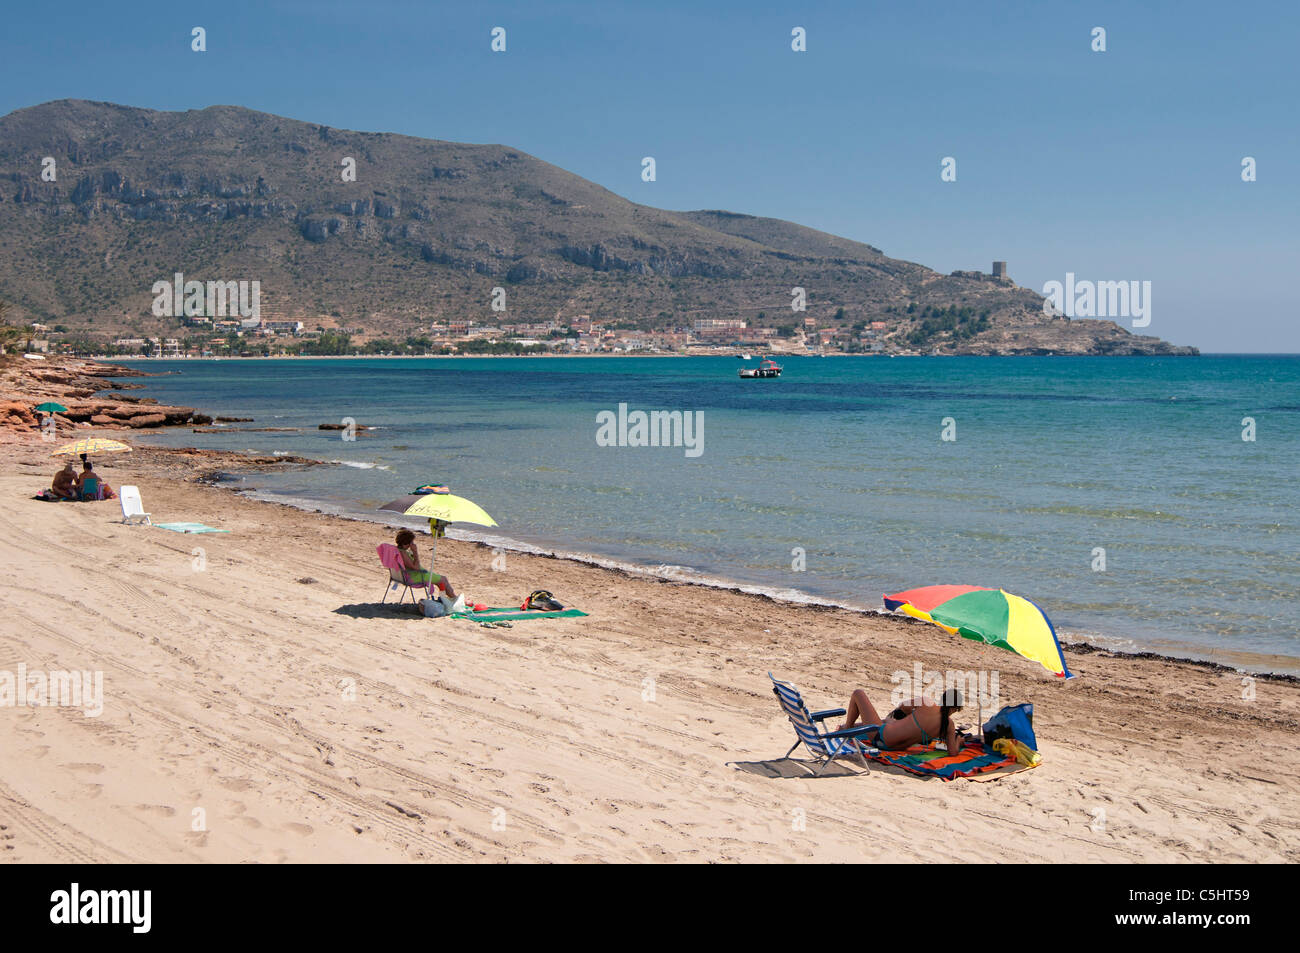 The beach at La Azohia, Cartagena in the region of Murcia, South Eastern Spain Stock Photo